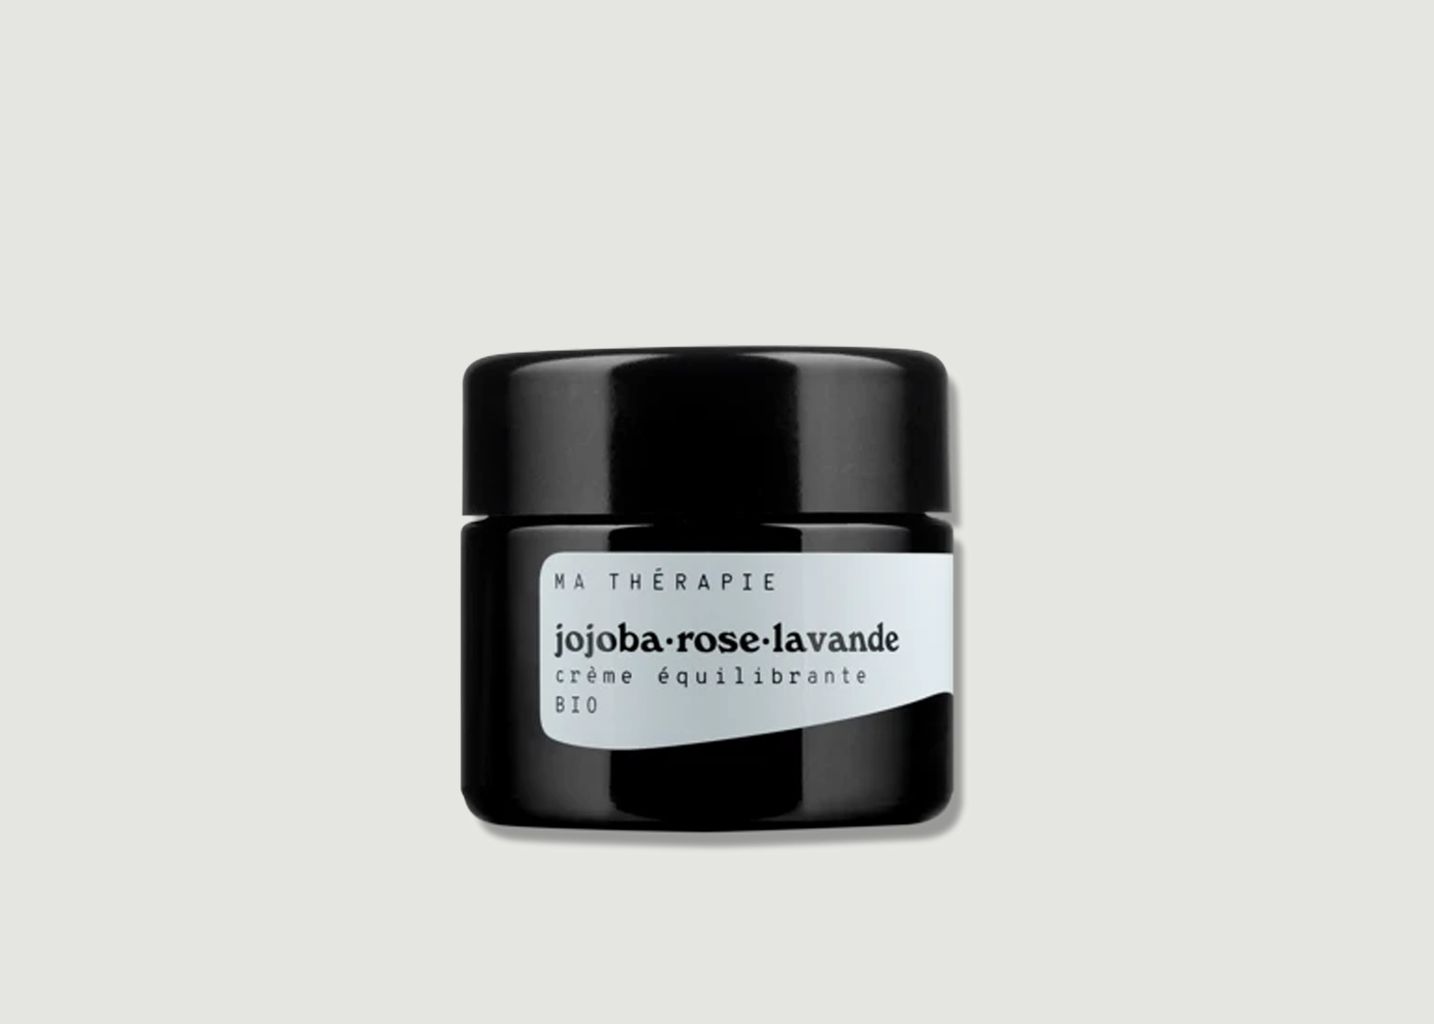 Jojoba Ausgleichende Creme Rose Lavendel - Ma Thérapie